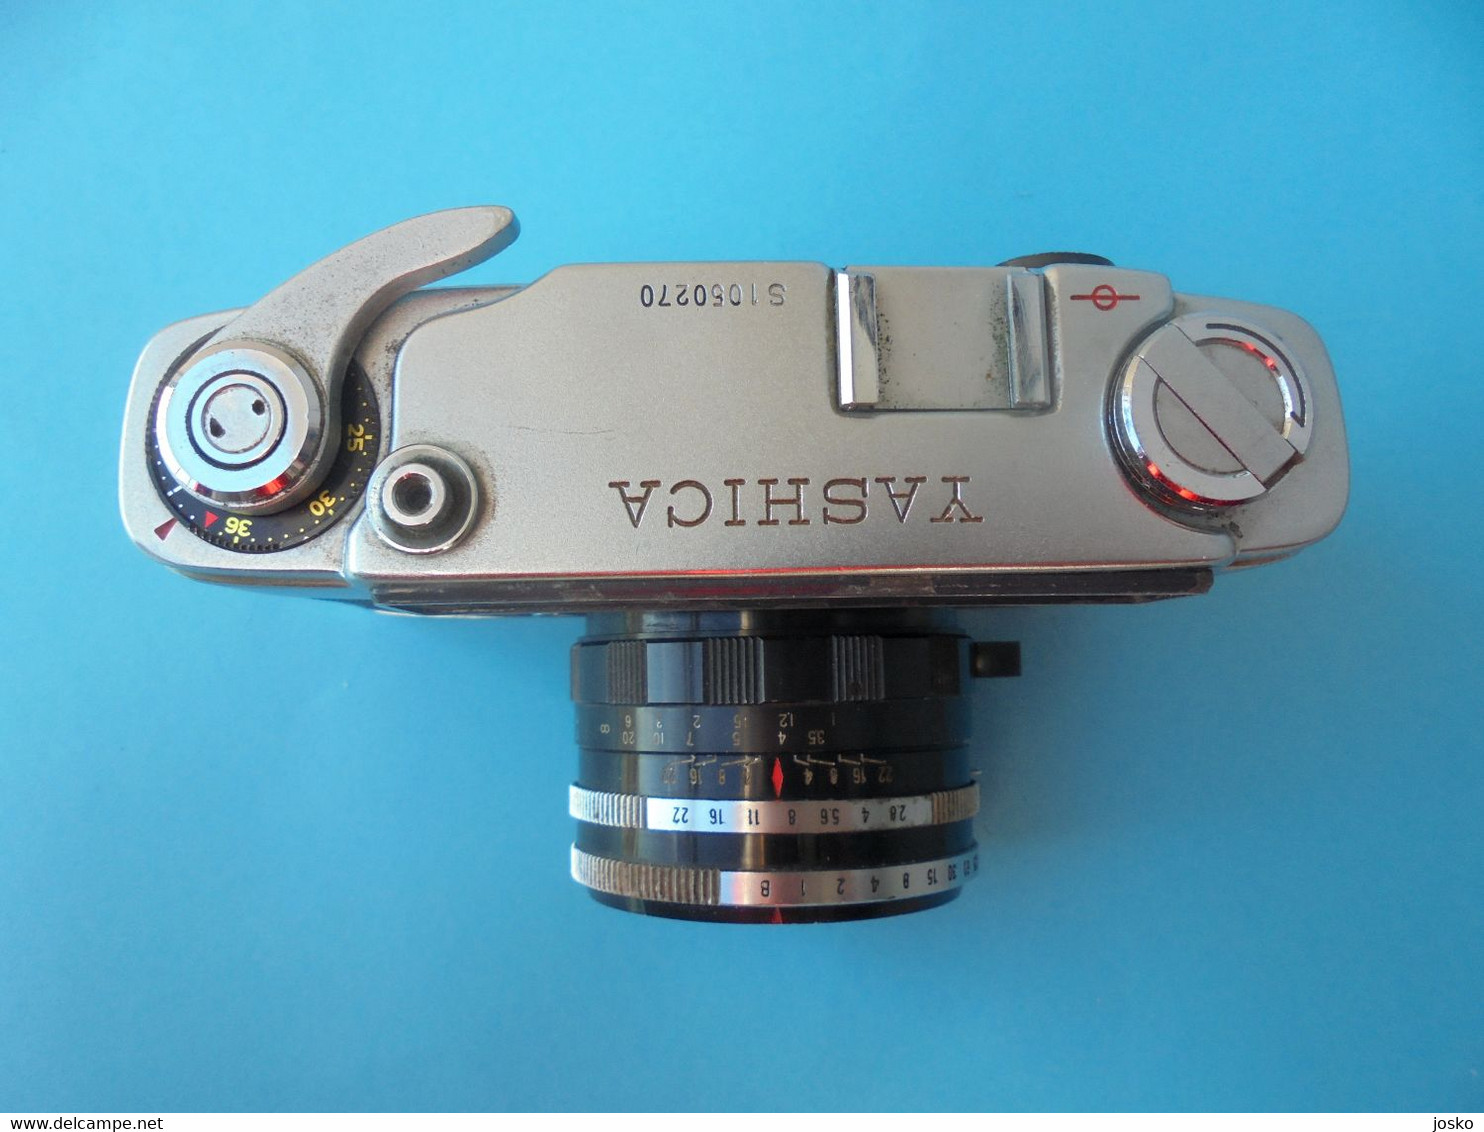 YASHICA - CAMPUS ... Yashinon I:2.8 4.5 Cm ... Vintage Camera (Made In Japan) * Kamera Telecamera Camara - Cameras